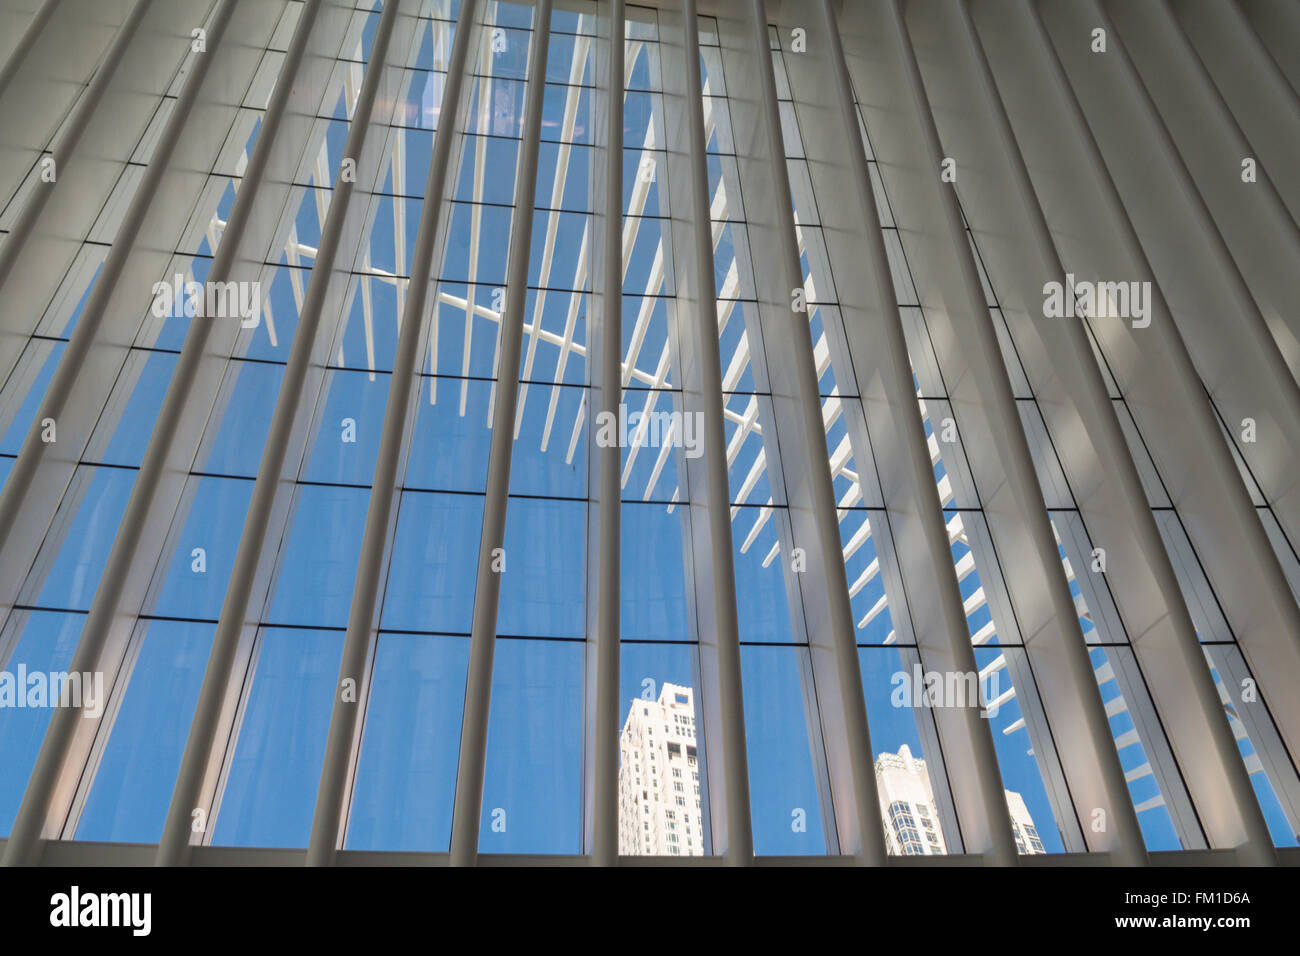 The Oculus Inside the World Trade Center Transportation Hub,  Lower Manhattan, NYC,  USA Stock Photo